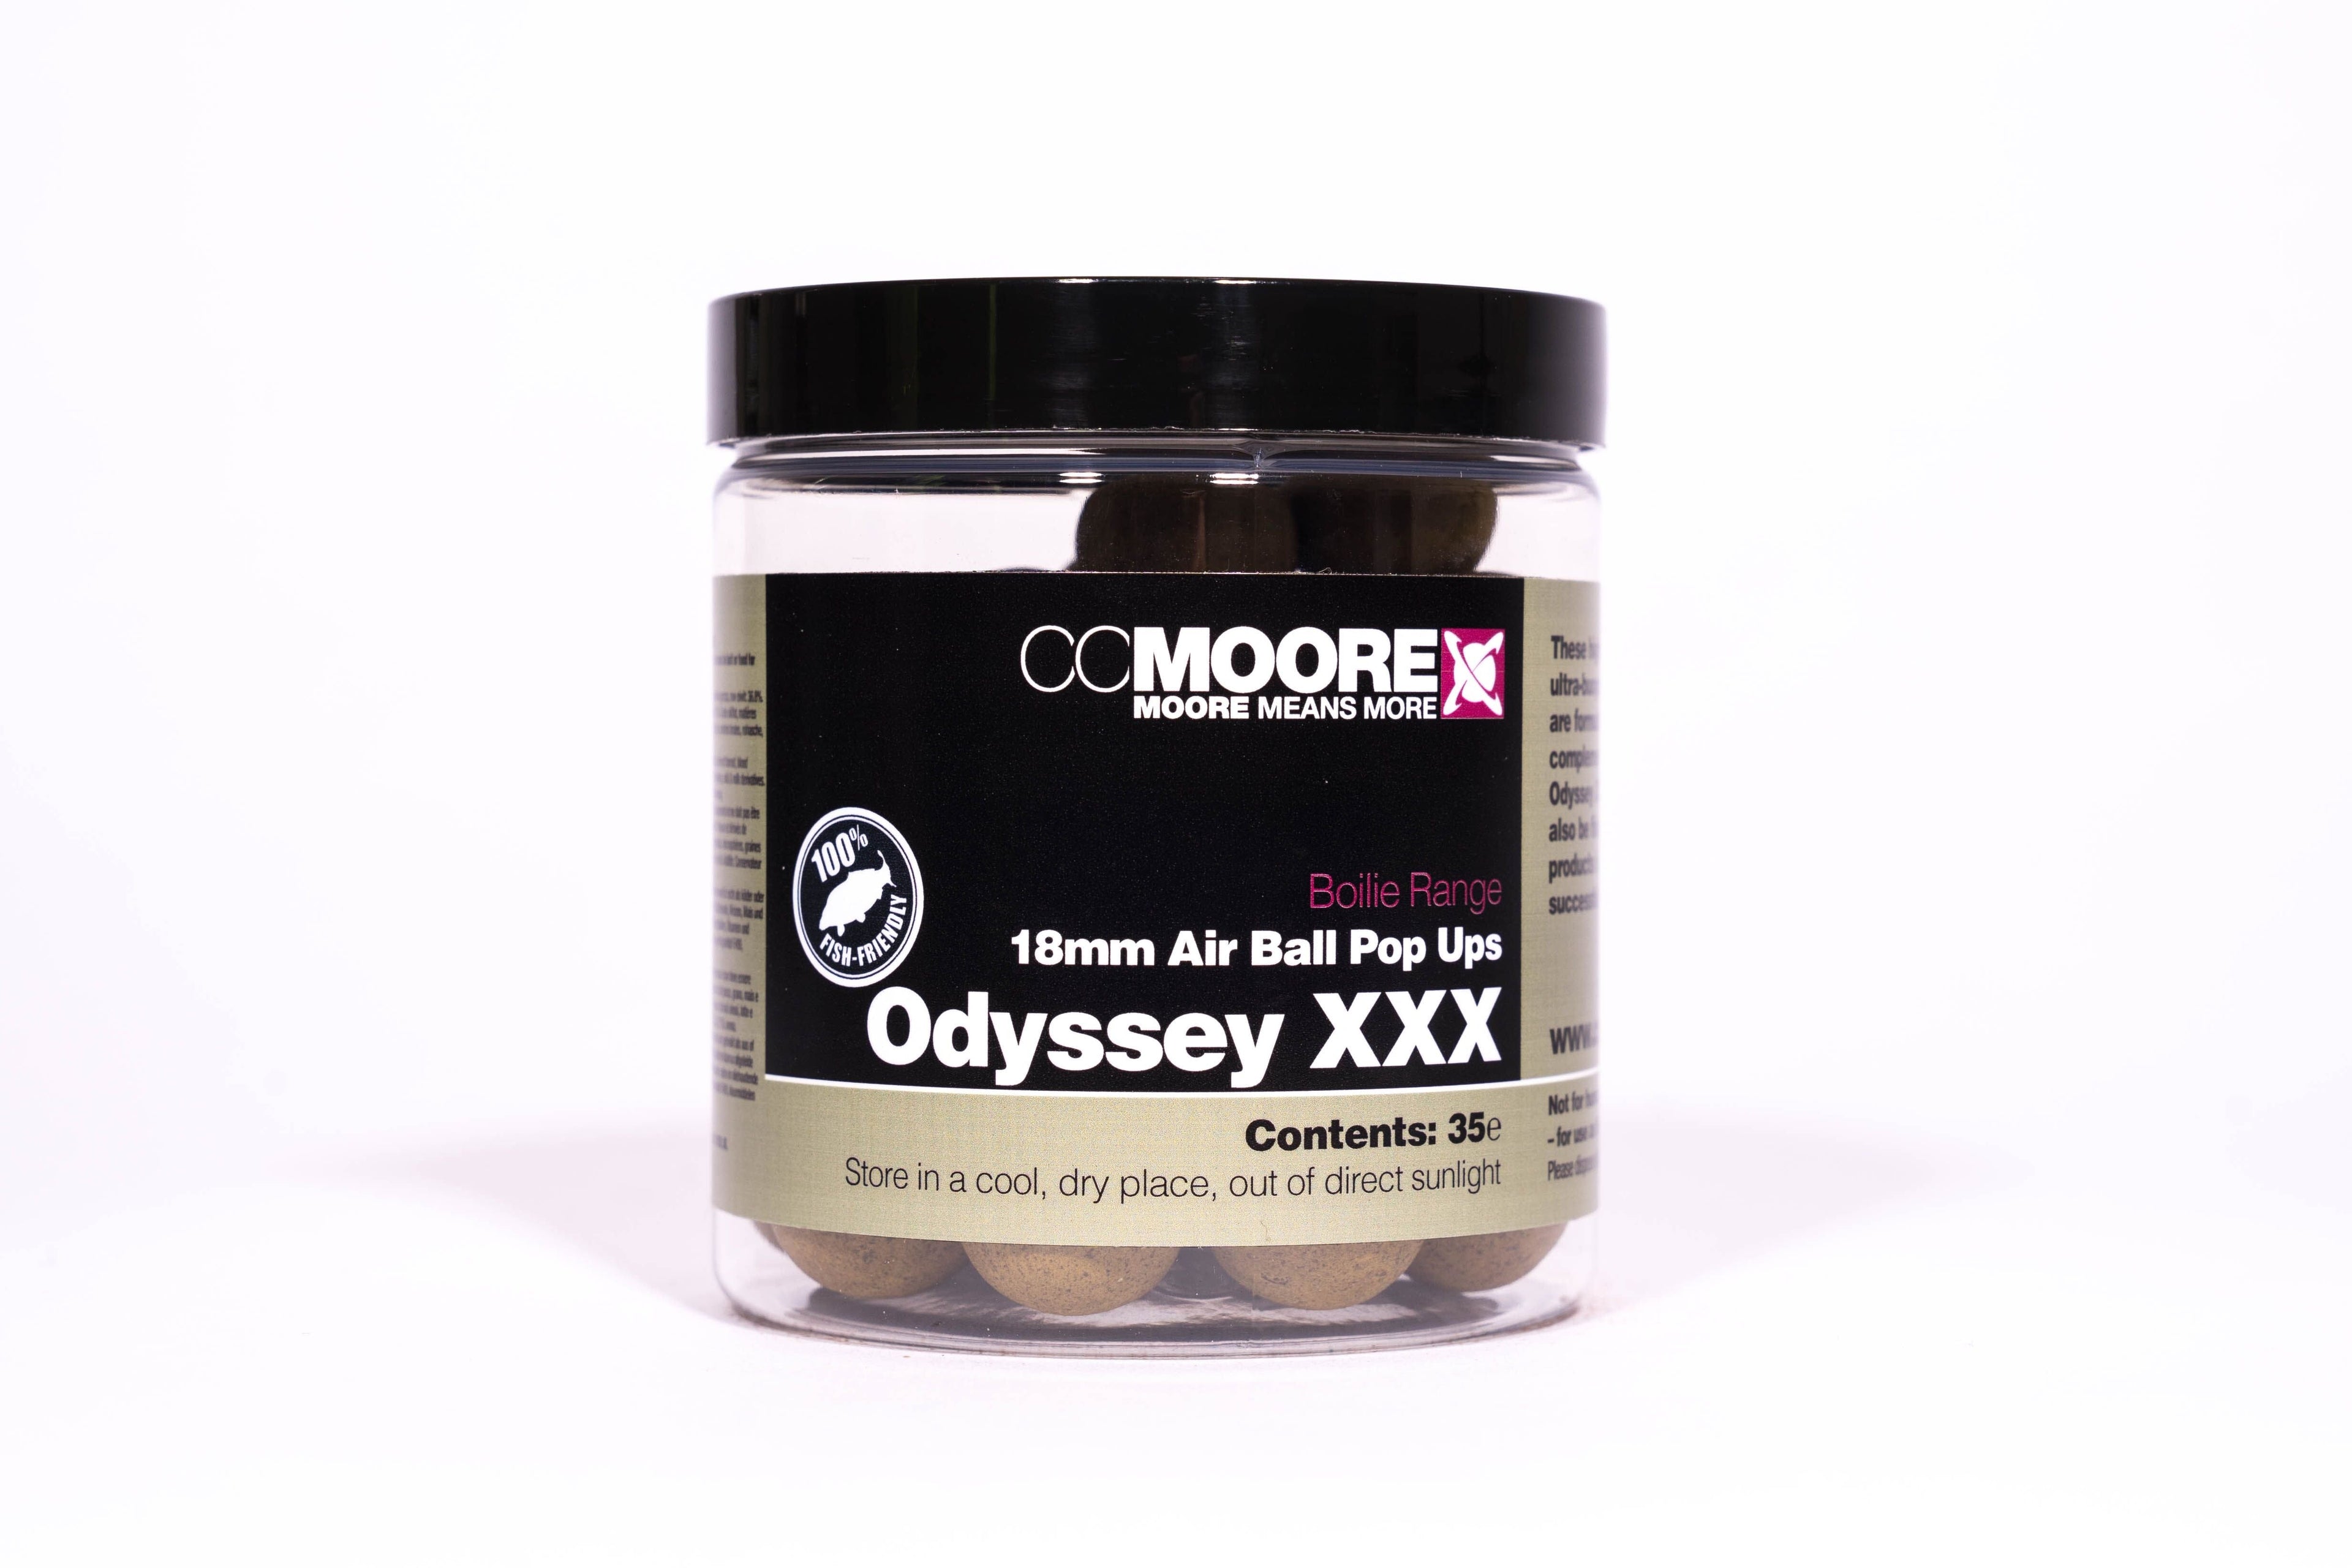 CC Moore Odyssey XXX Air Ball Pop Ups 18mm